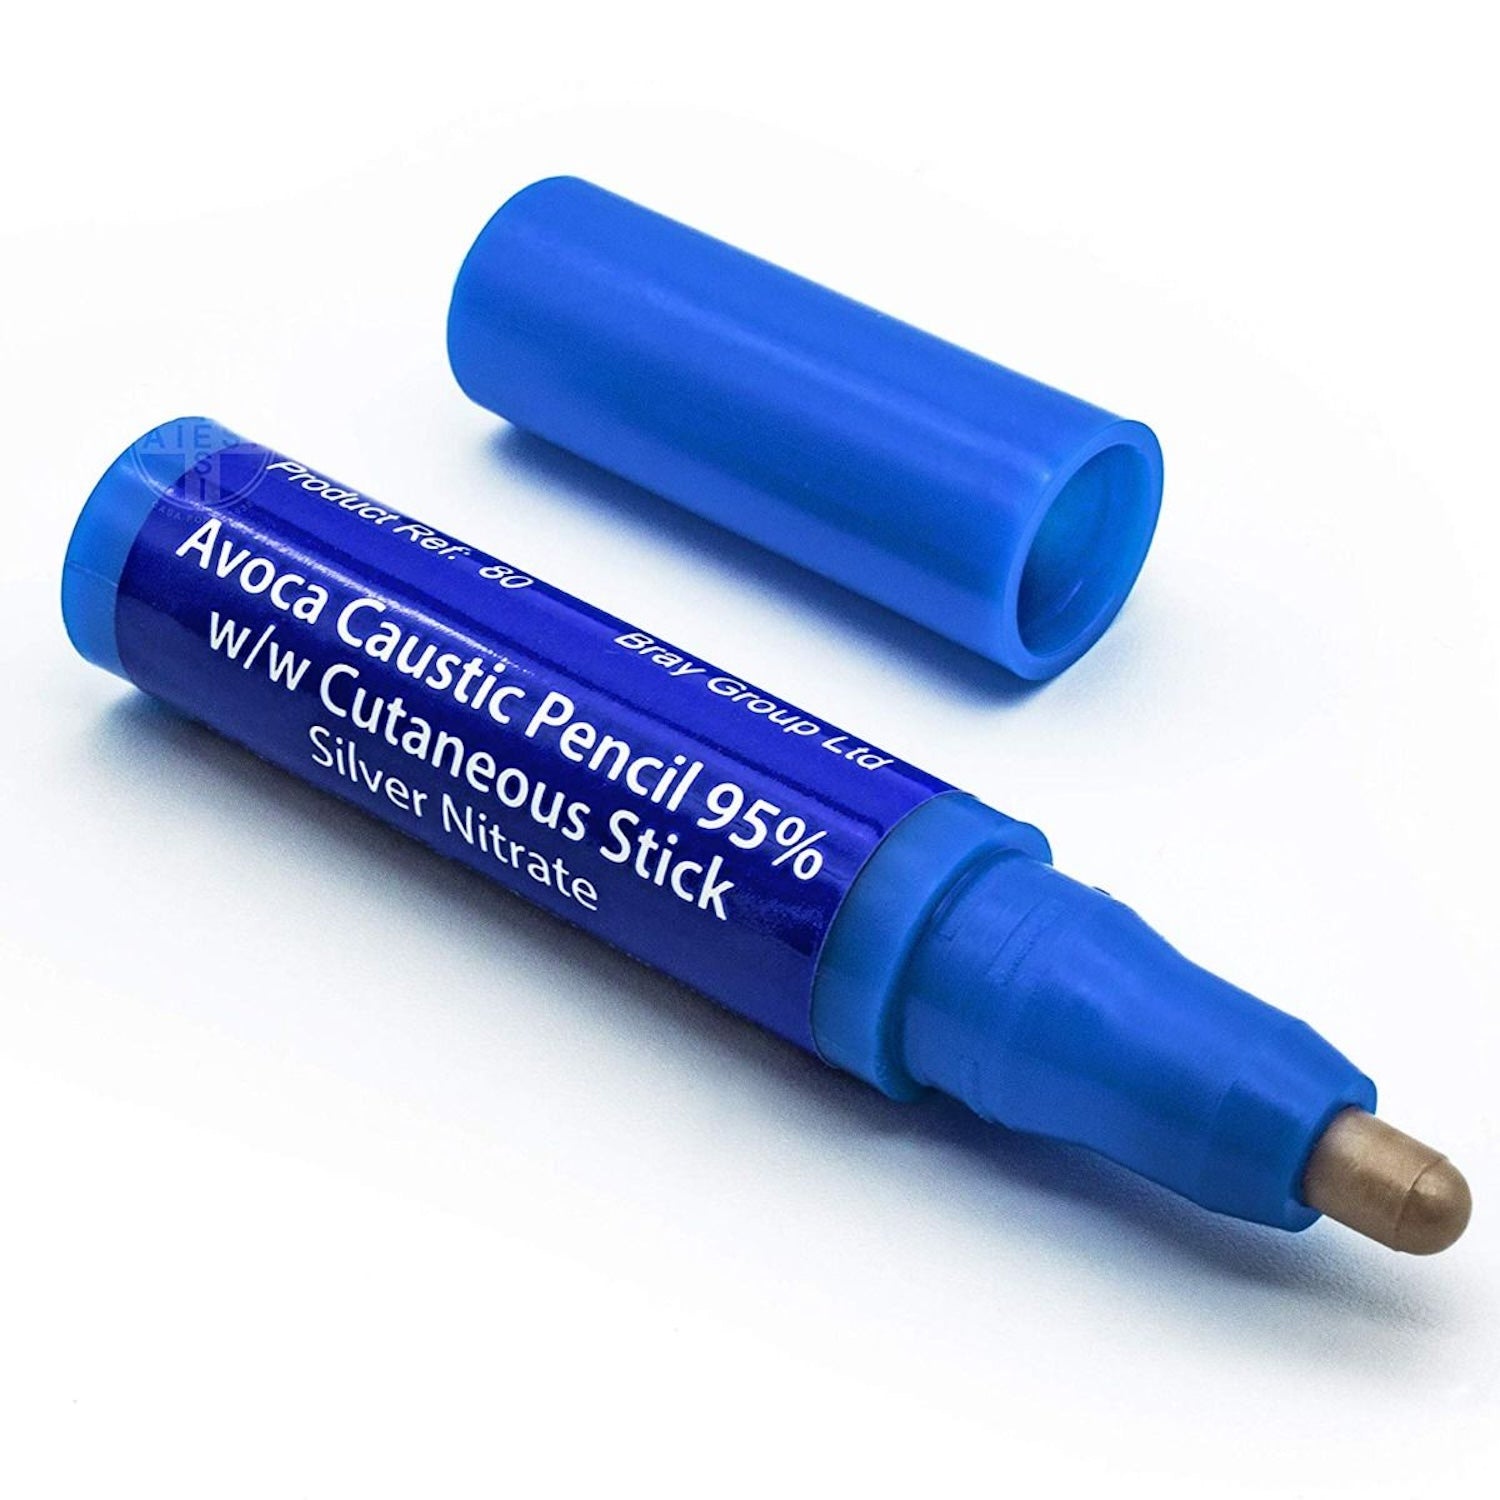 Avoca Caustic Silver Nitrate Pencil | P | 95% | Cutaneous Stick | Single | Short Expiry Date